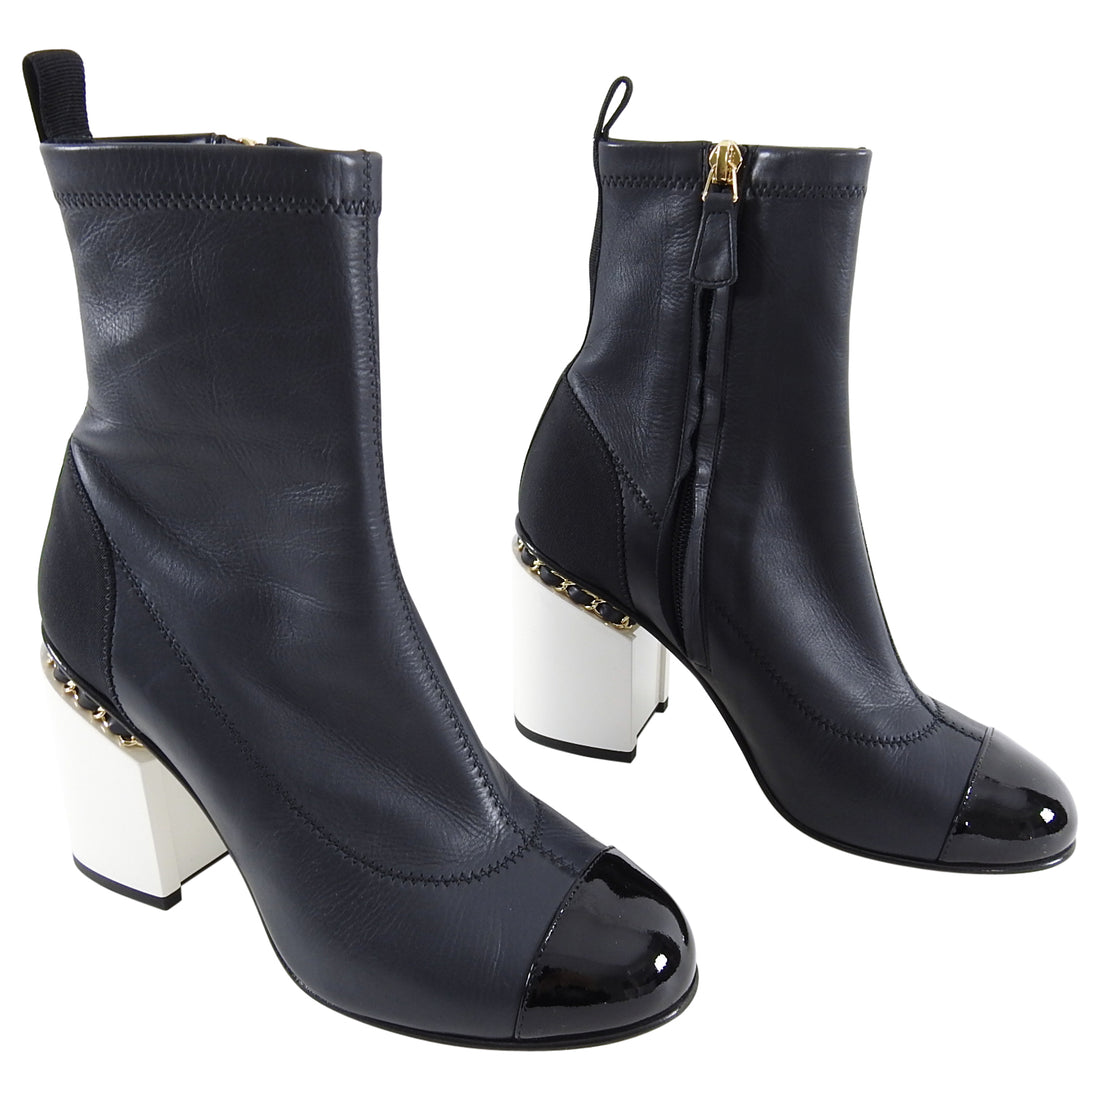 Chanel NIB Black White Ankle Boots - Vintage Lux